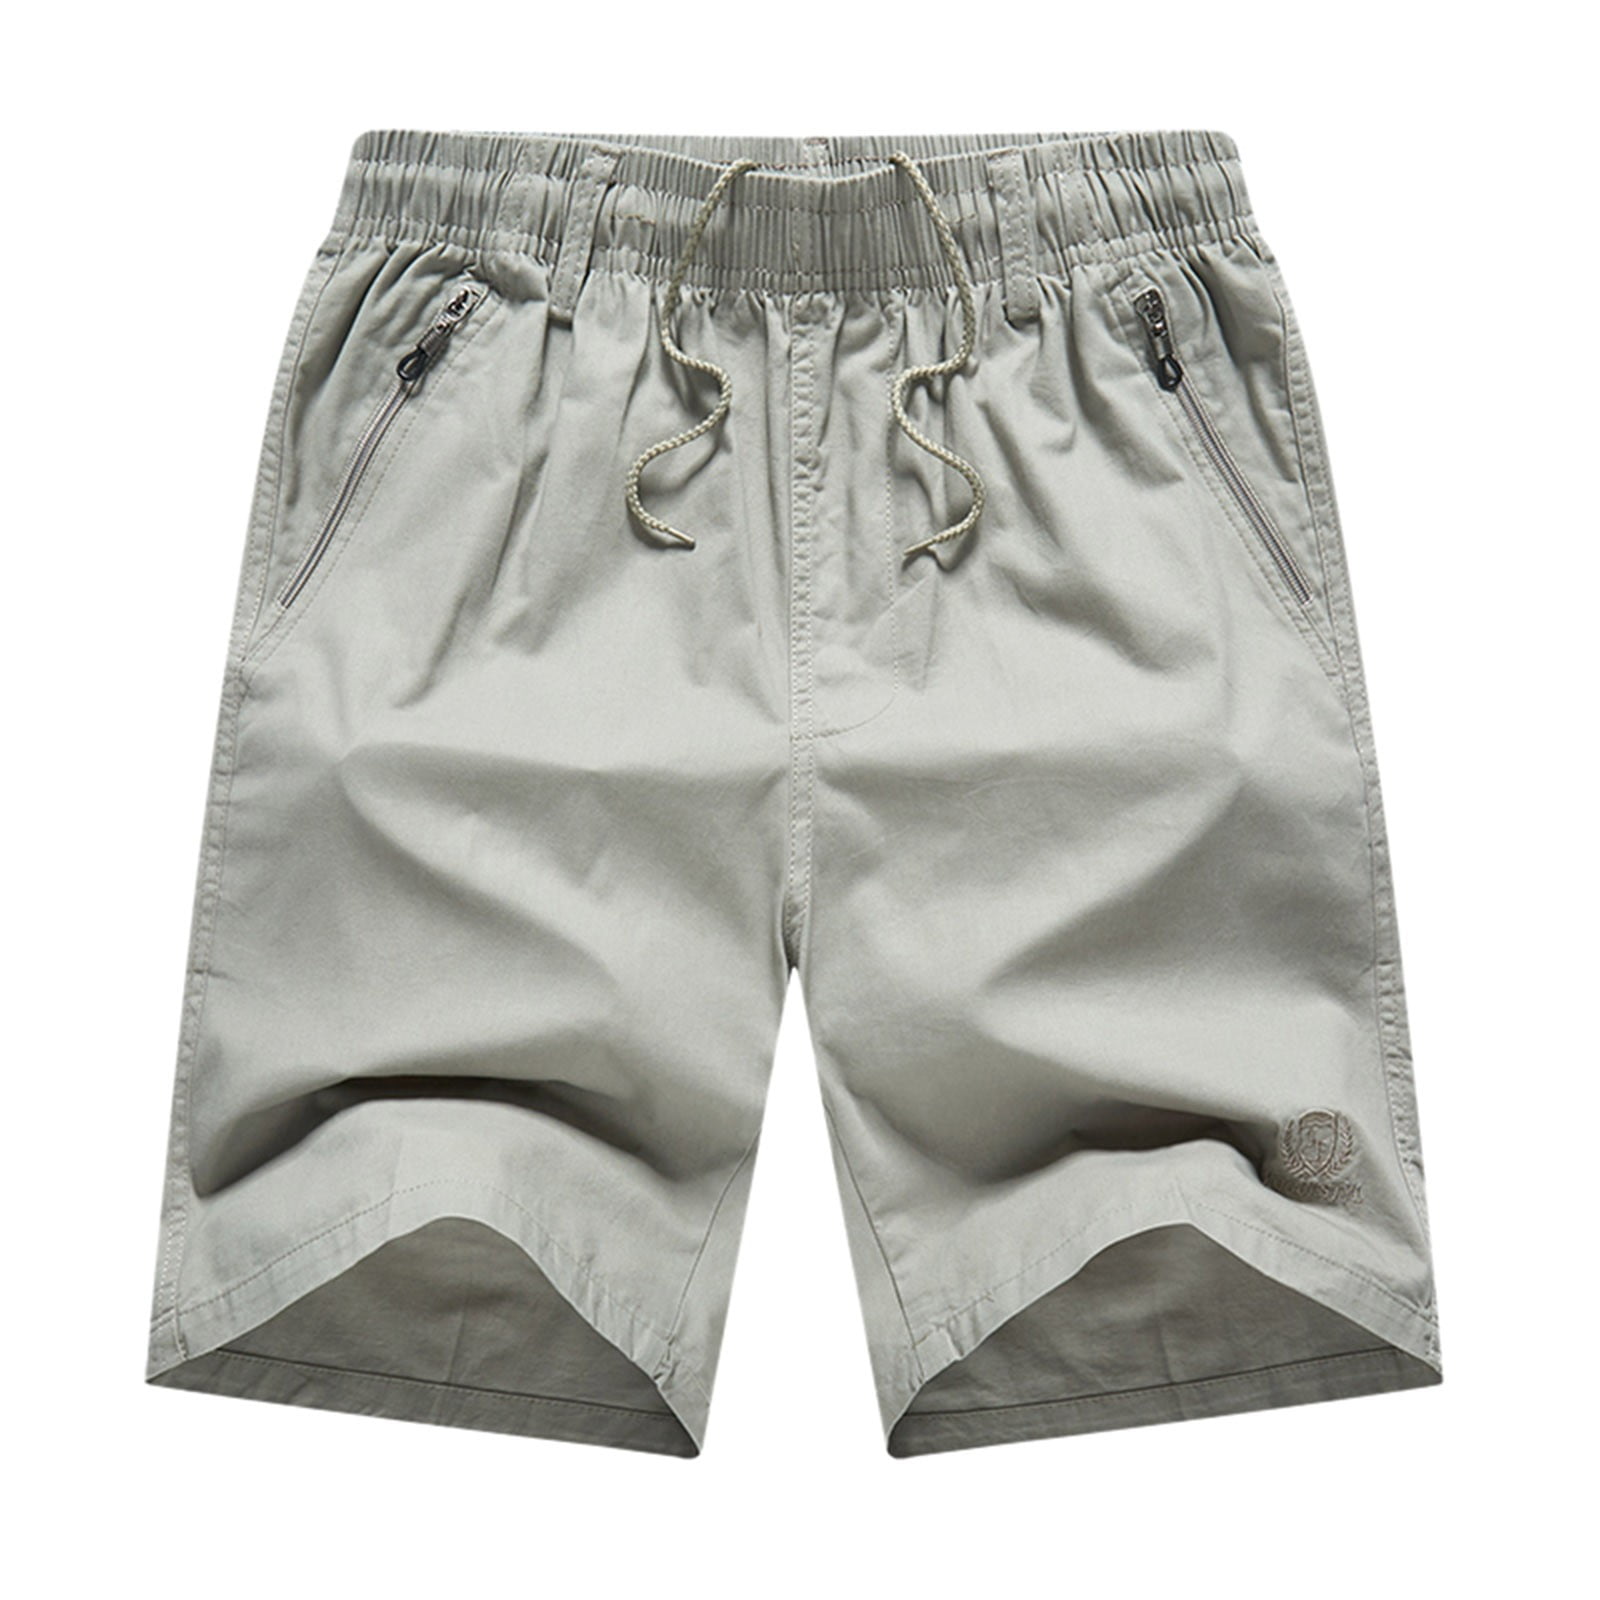 Camo Pants for Men Male Spring Summer Shorts Striped Pocket Tether ...